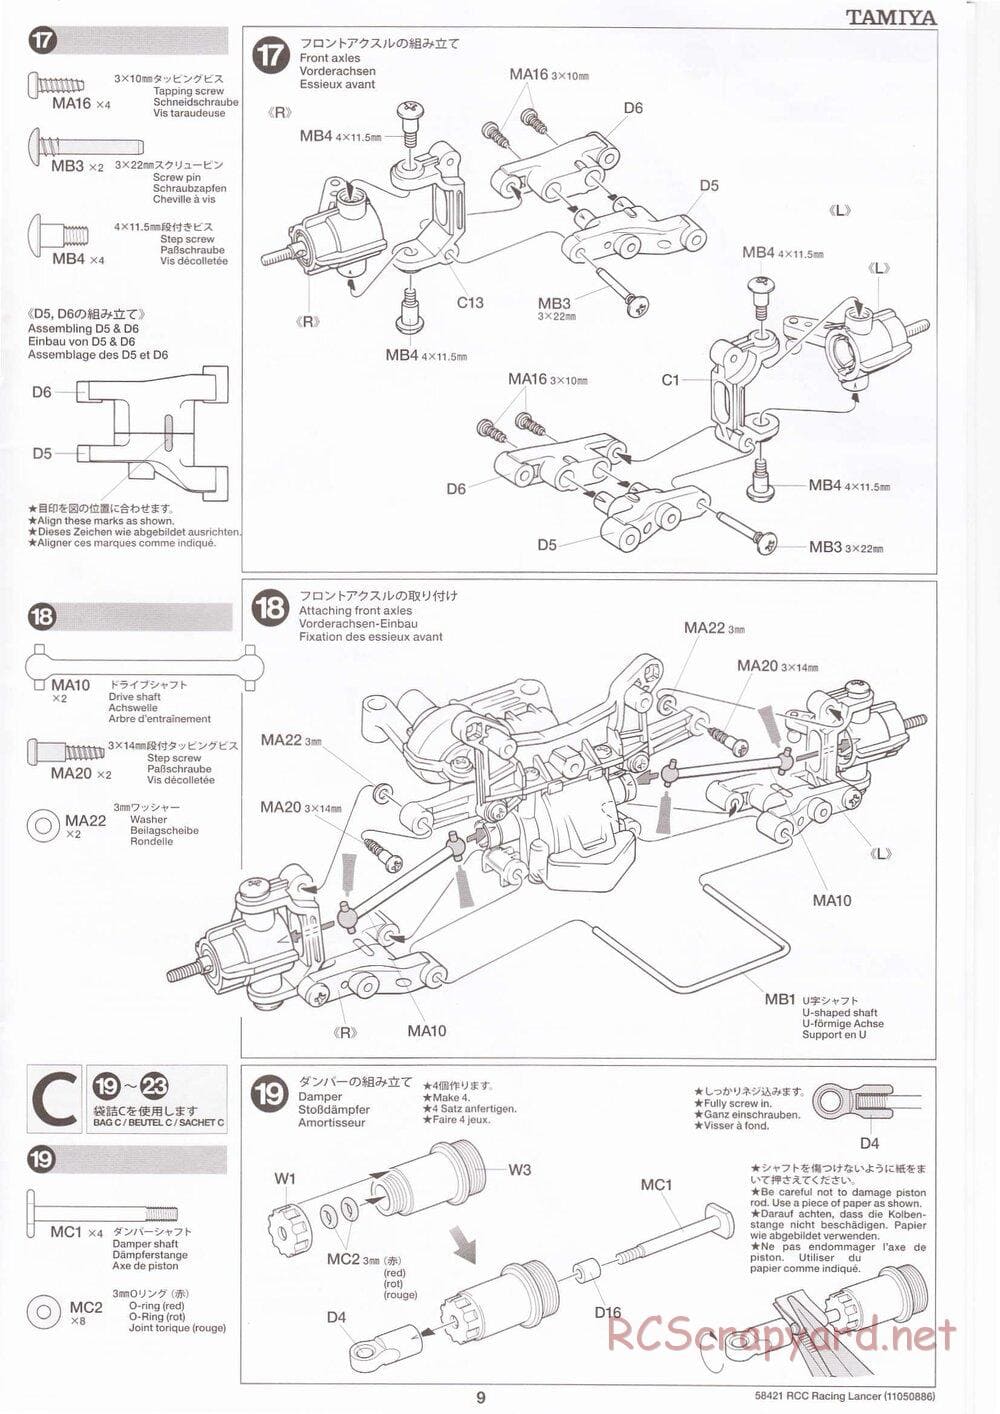 Tamiya - Mitsubishi Racing Lancer - DF-01 Chassis - Manual - Page 9